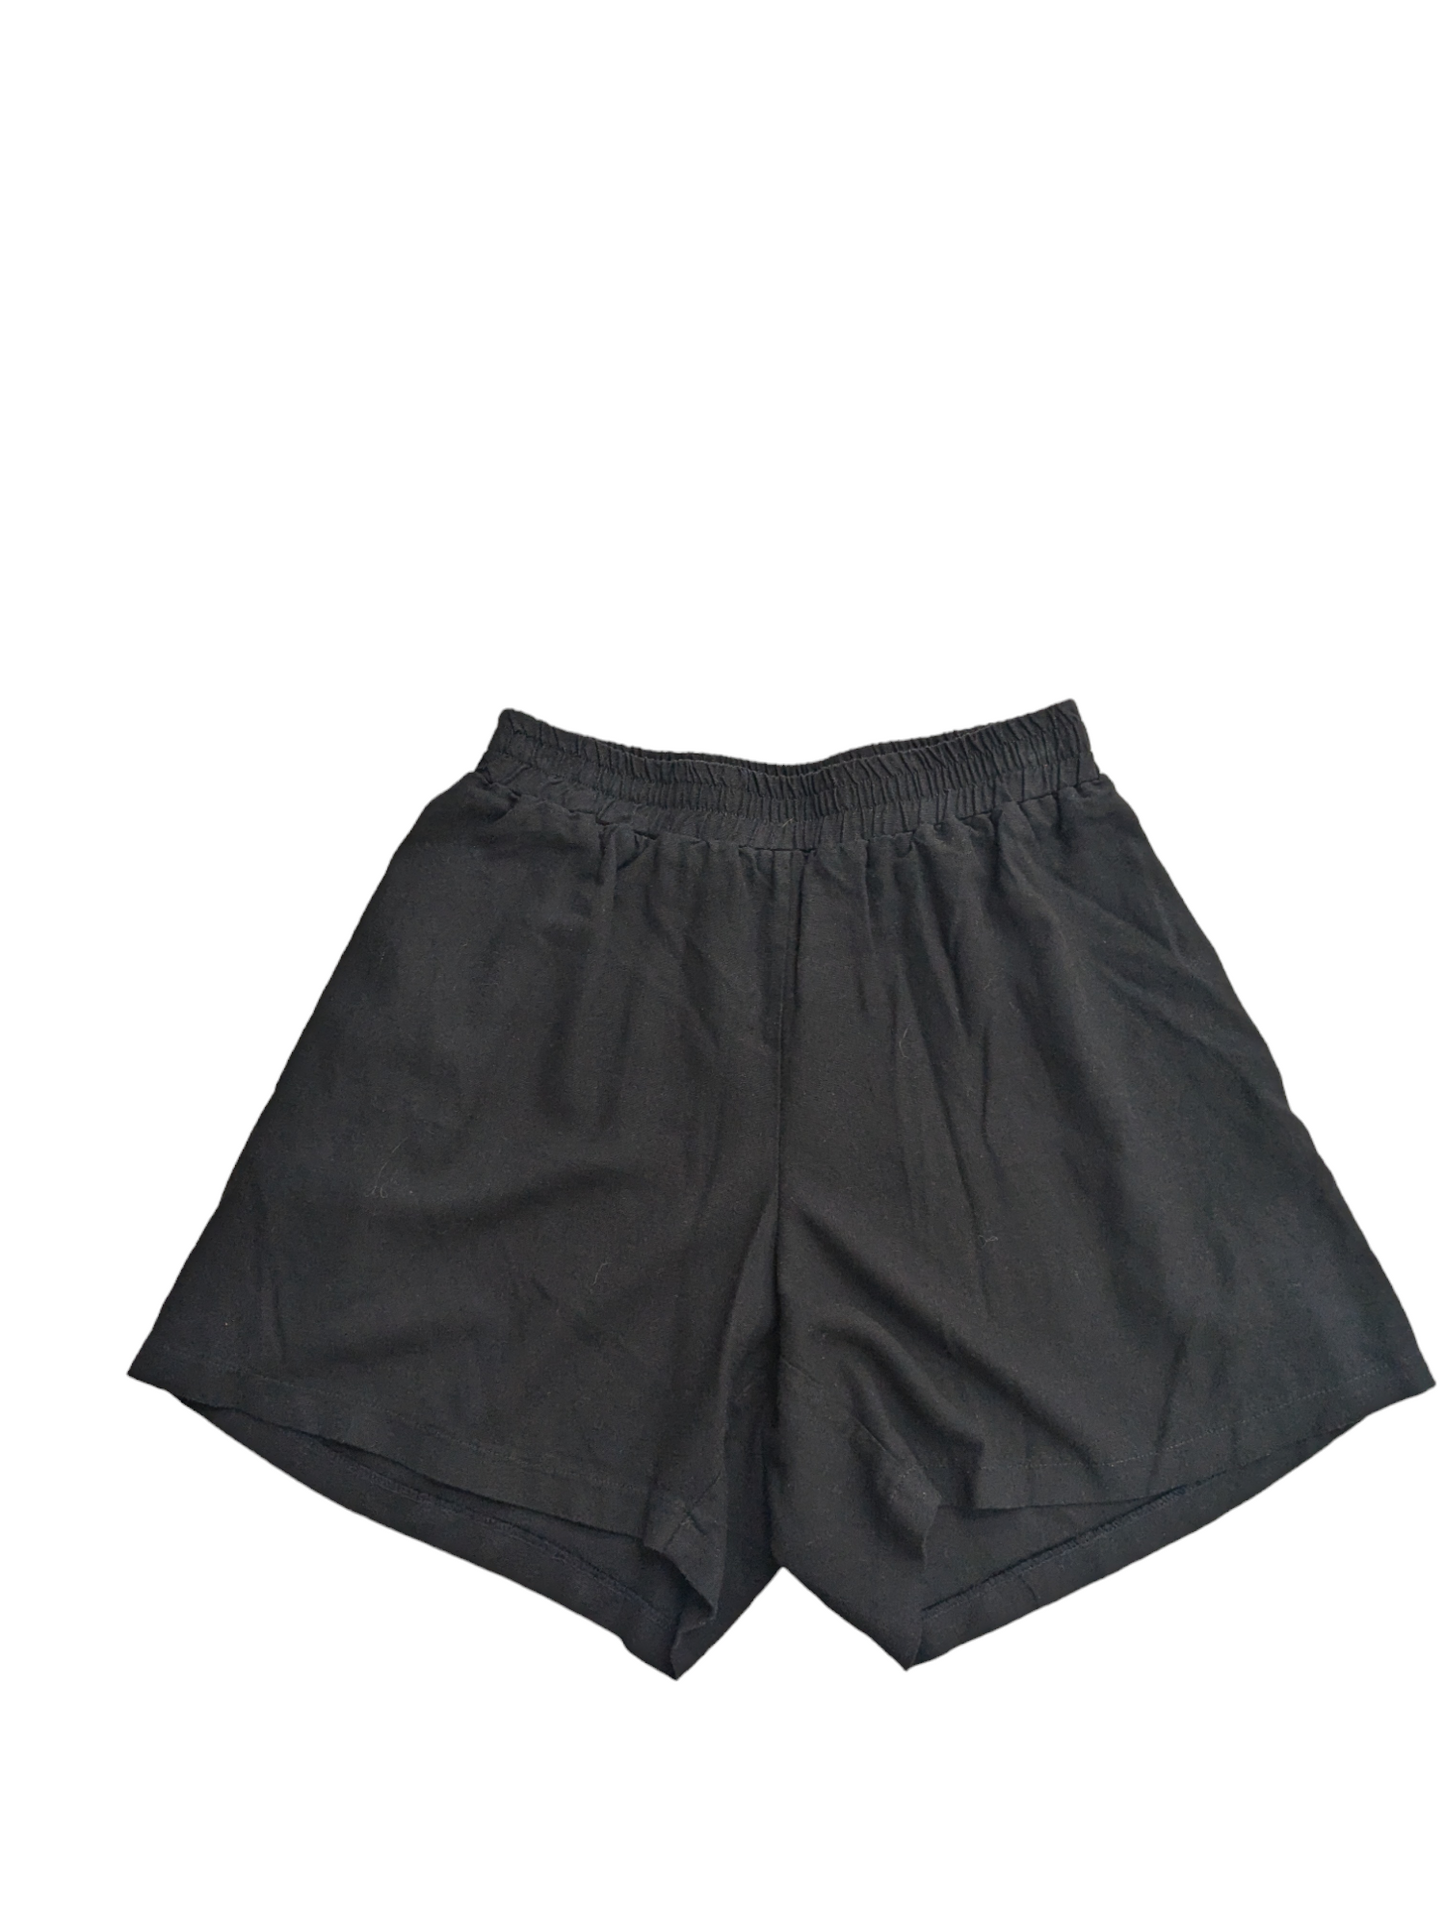 Black Shorts TACH CLOTHING, Size S